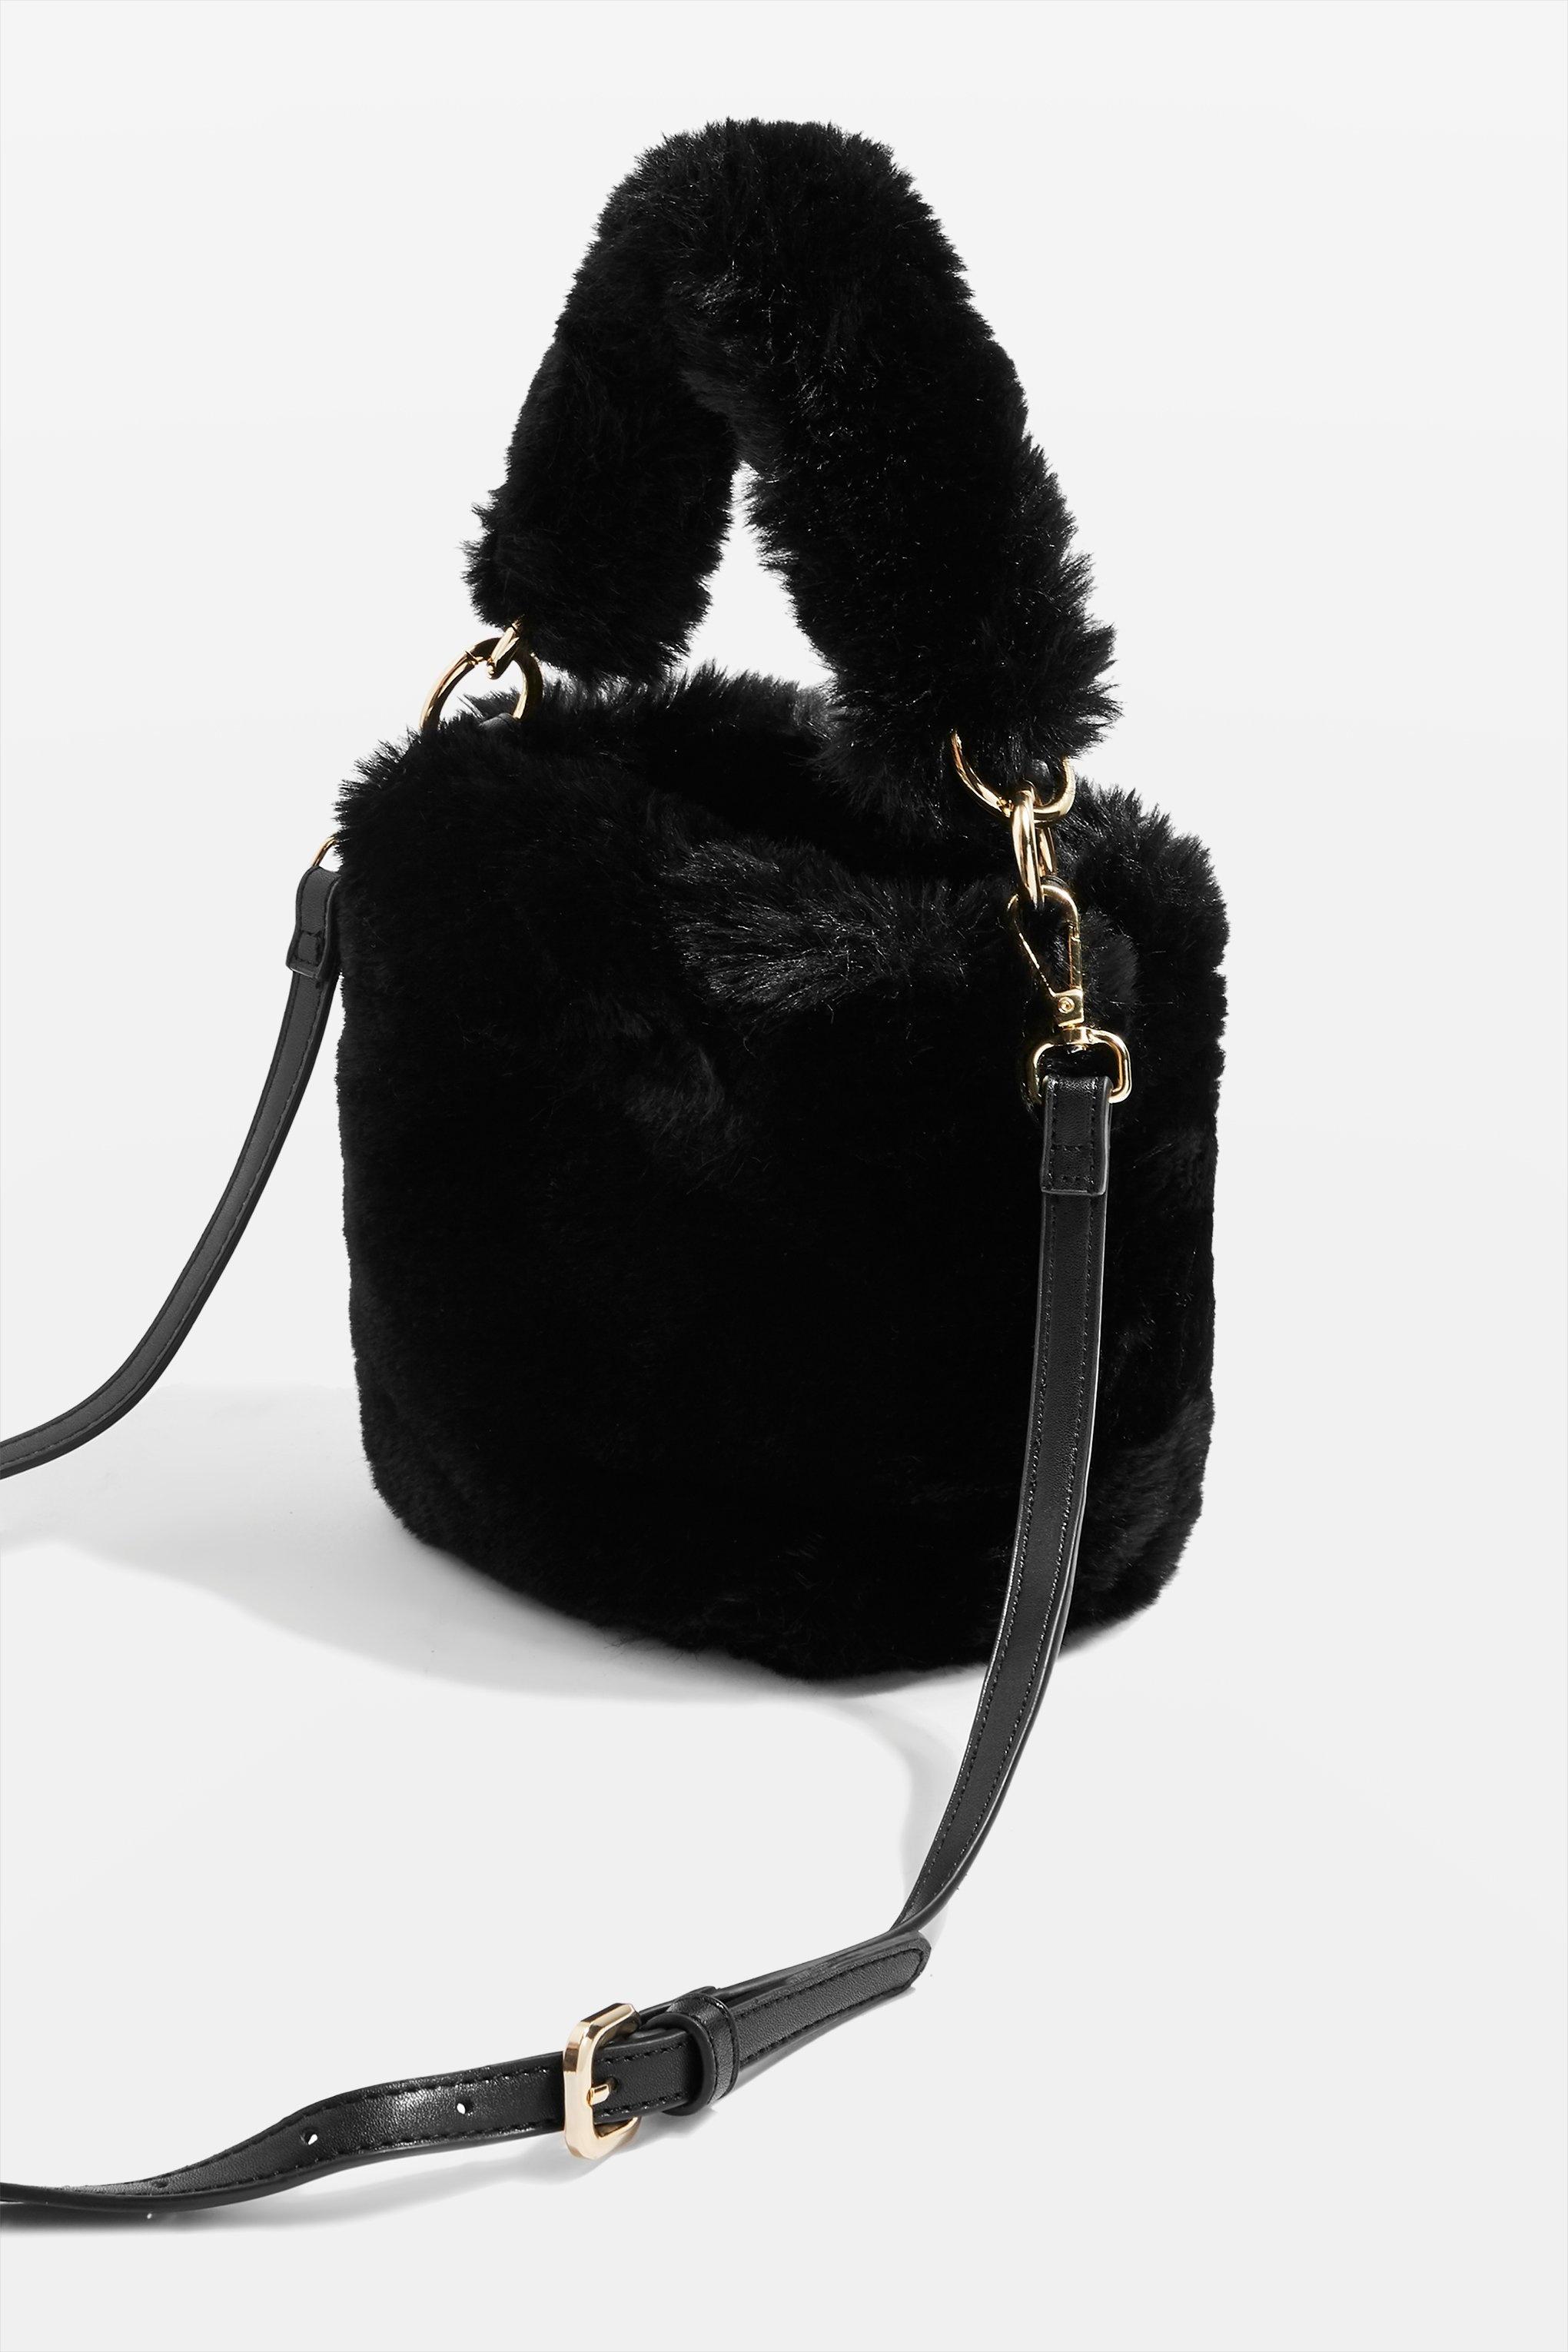 TOPSHOP Synthetic Teddy Faux Fur Bucket Bag in Black - Lyst